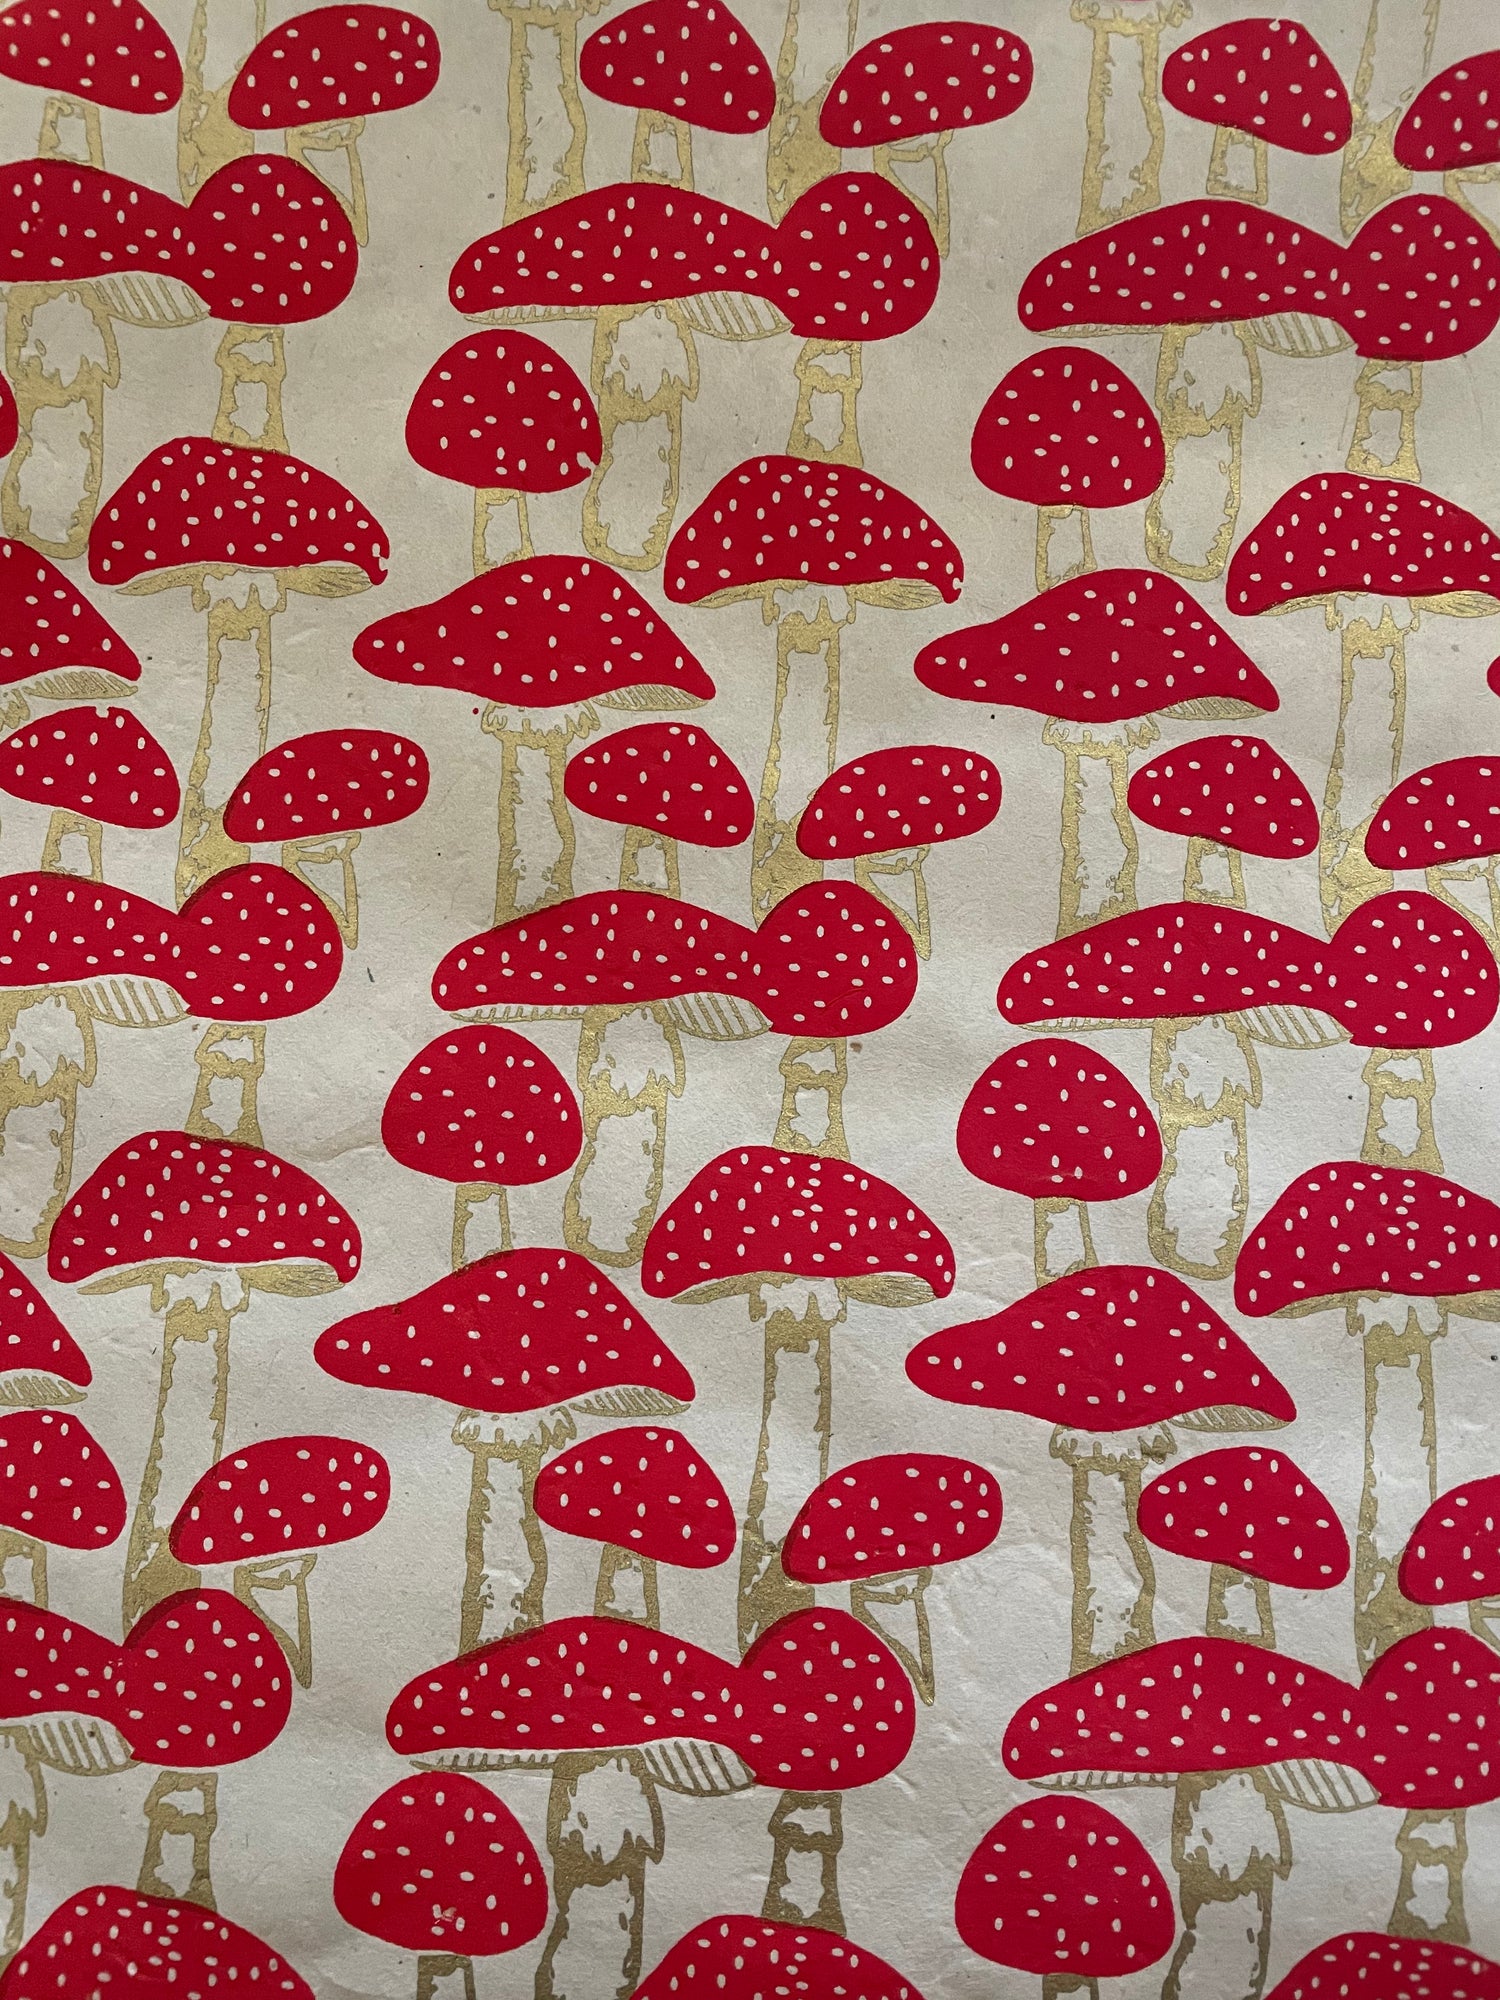 Handmade Paper - Mushrooms